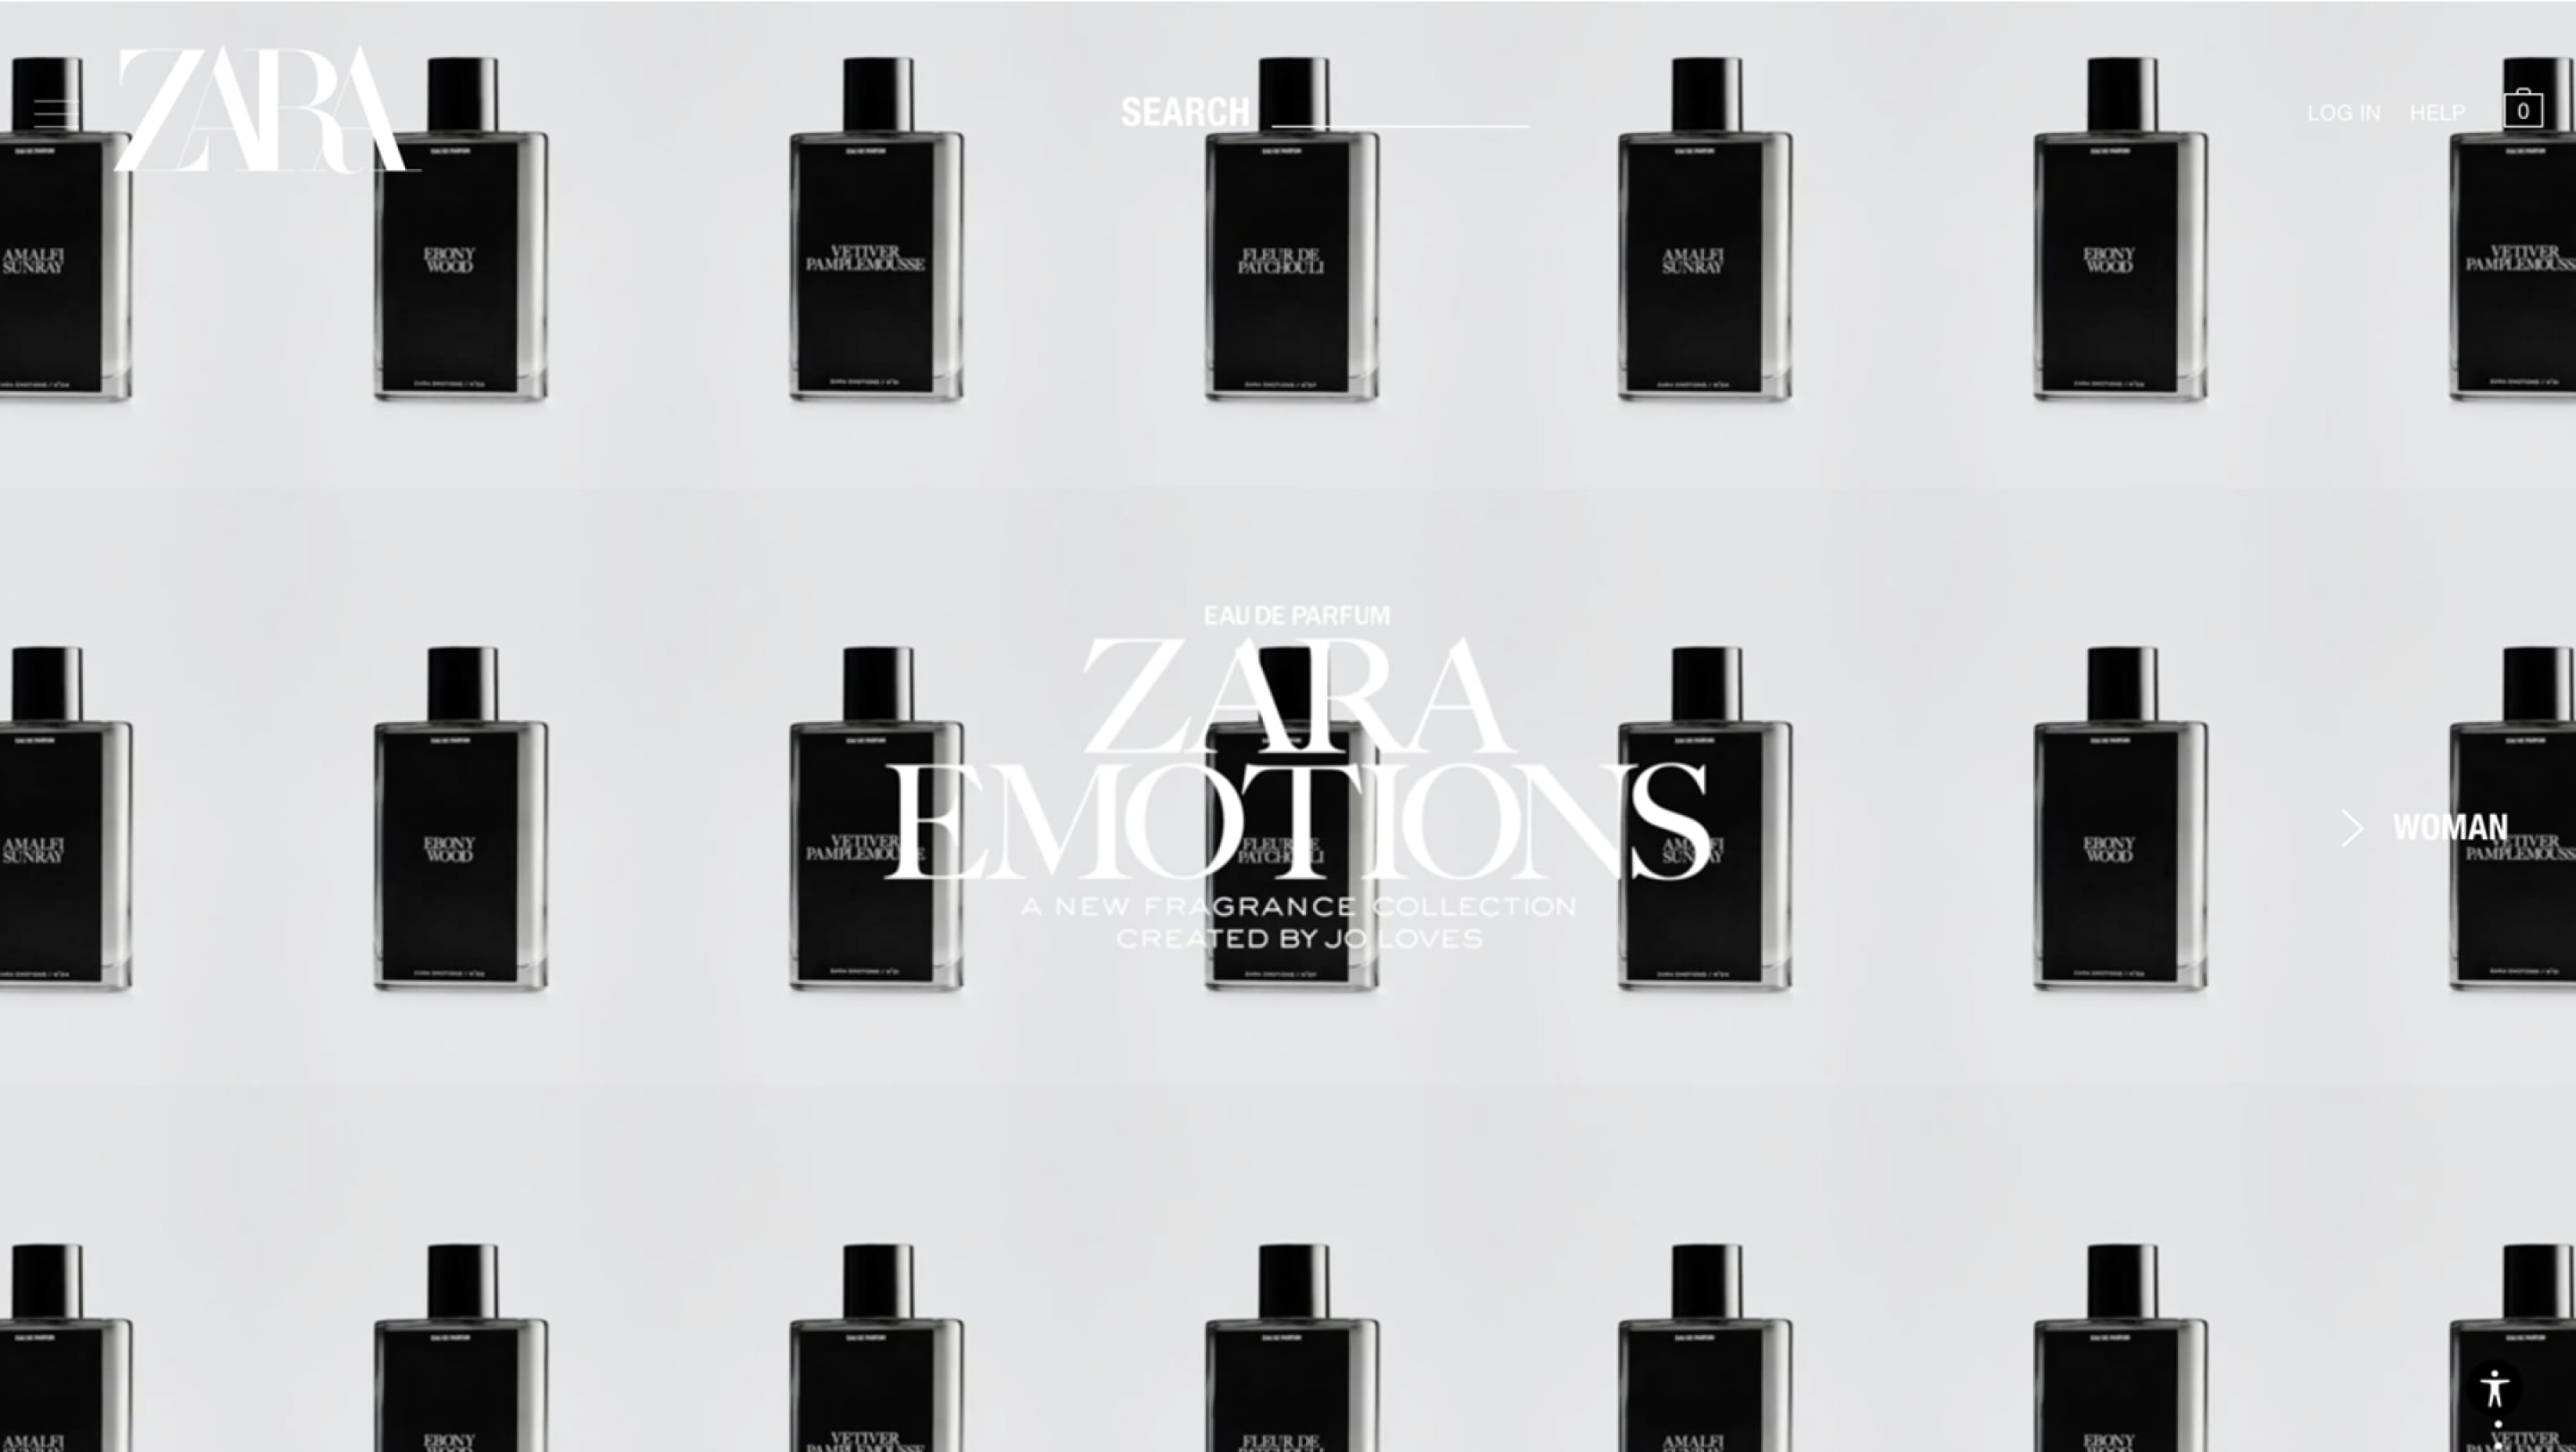 Screenshot of the masthead of Zara's website